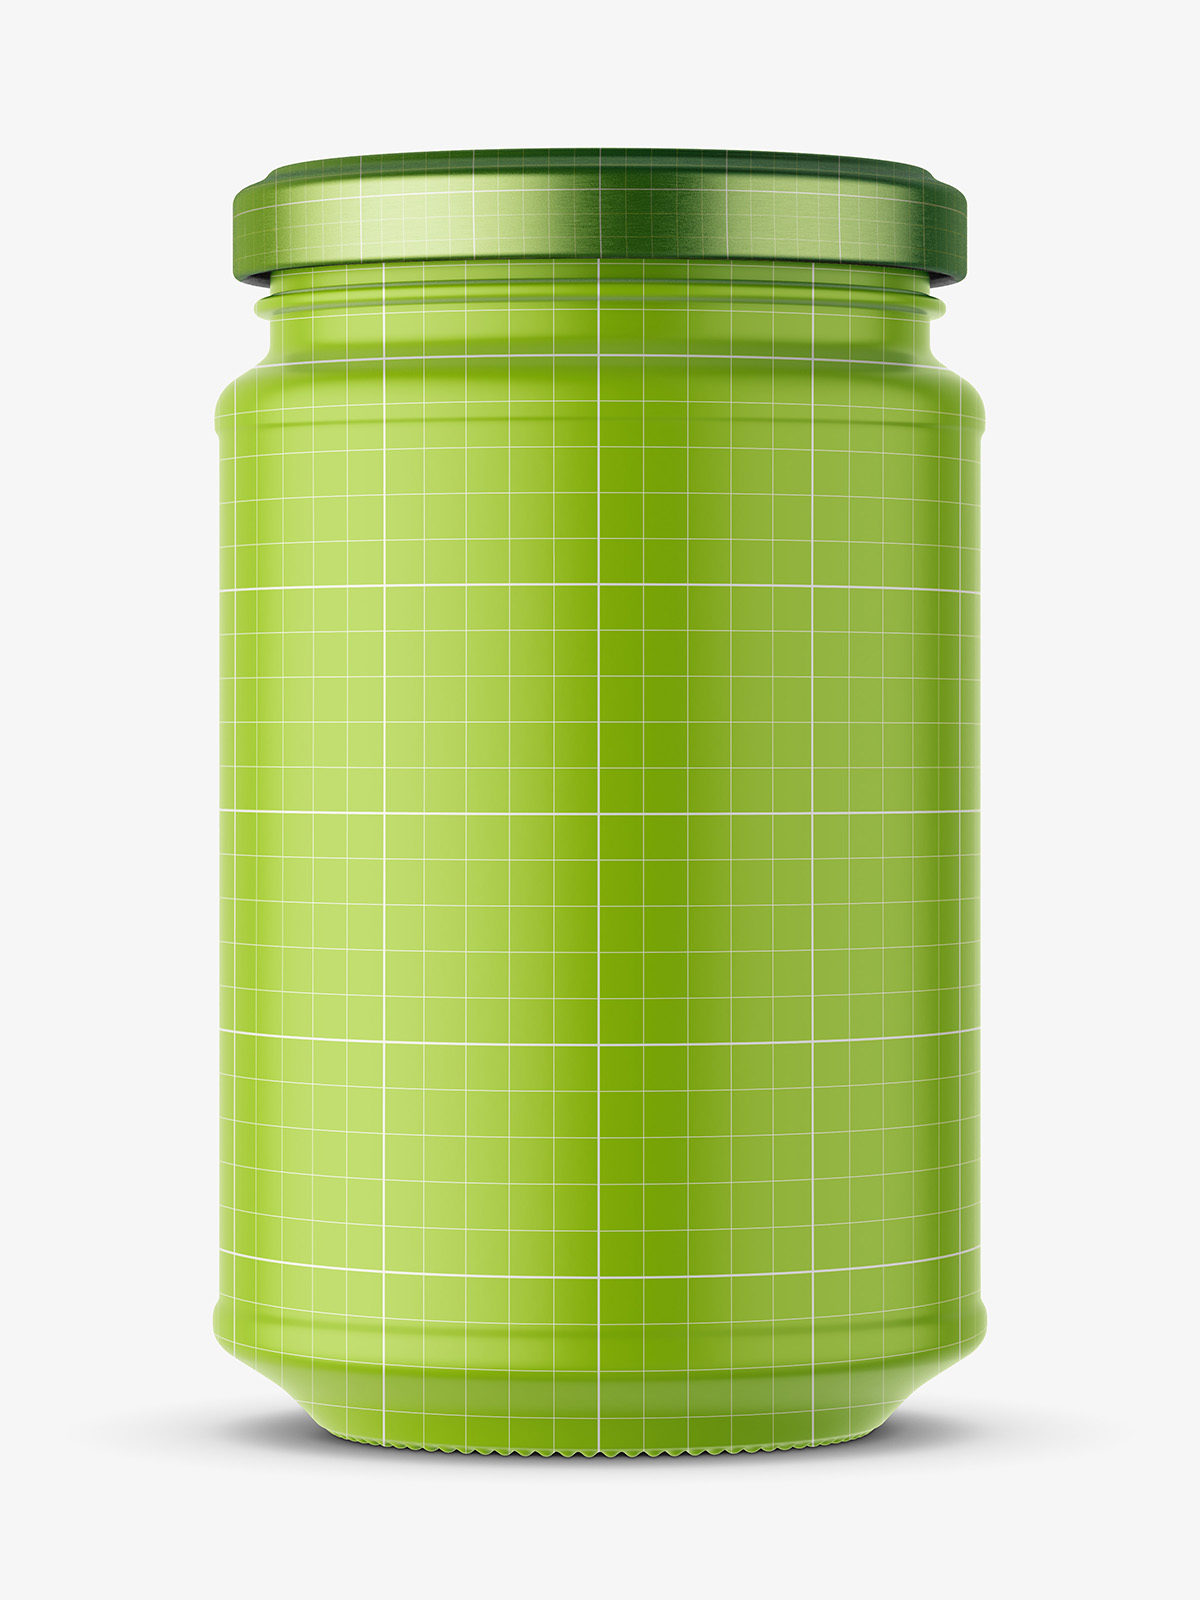 Download Tartar sauce jar mockup - Smarty Mockups